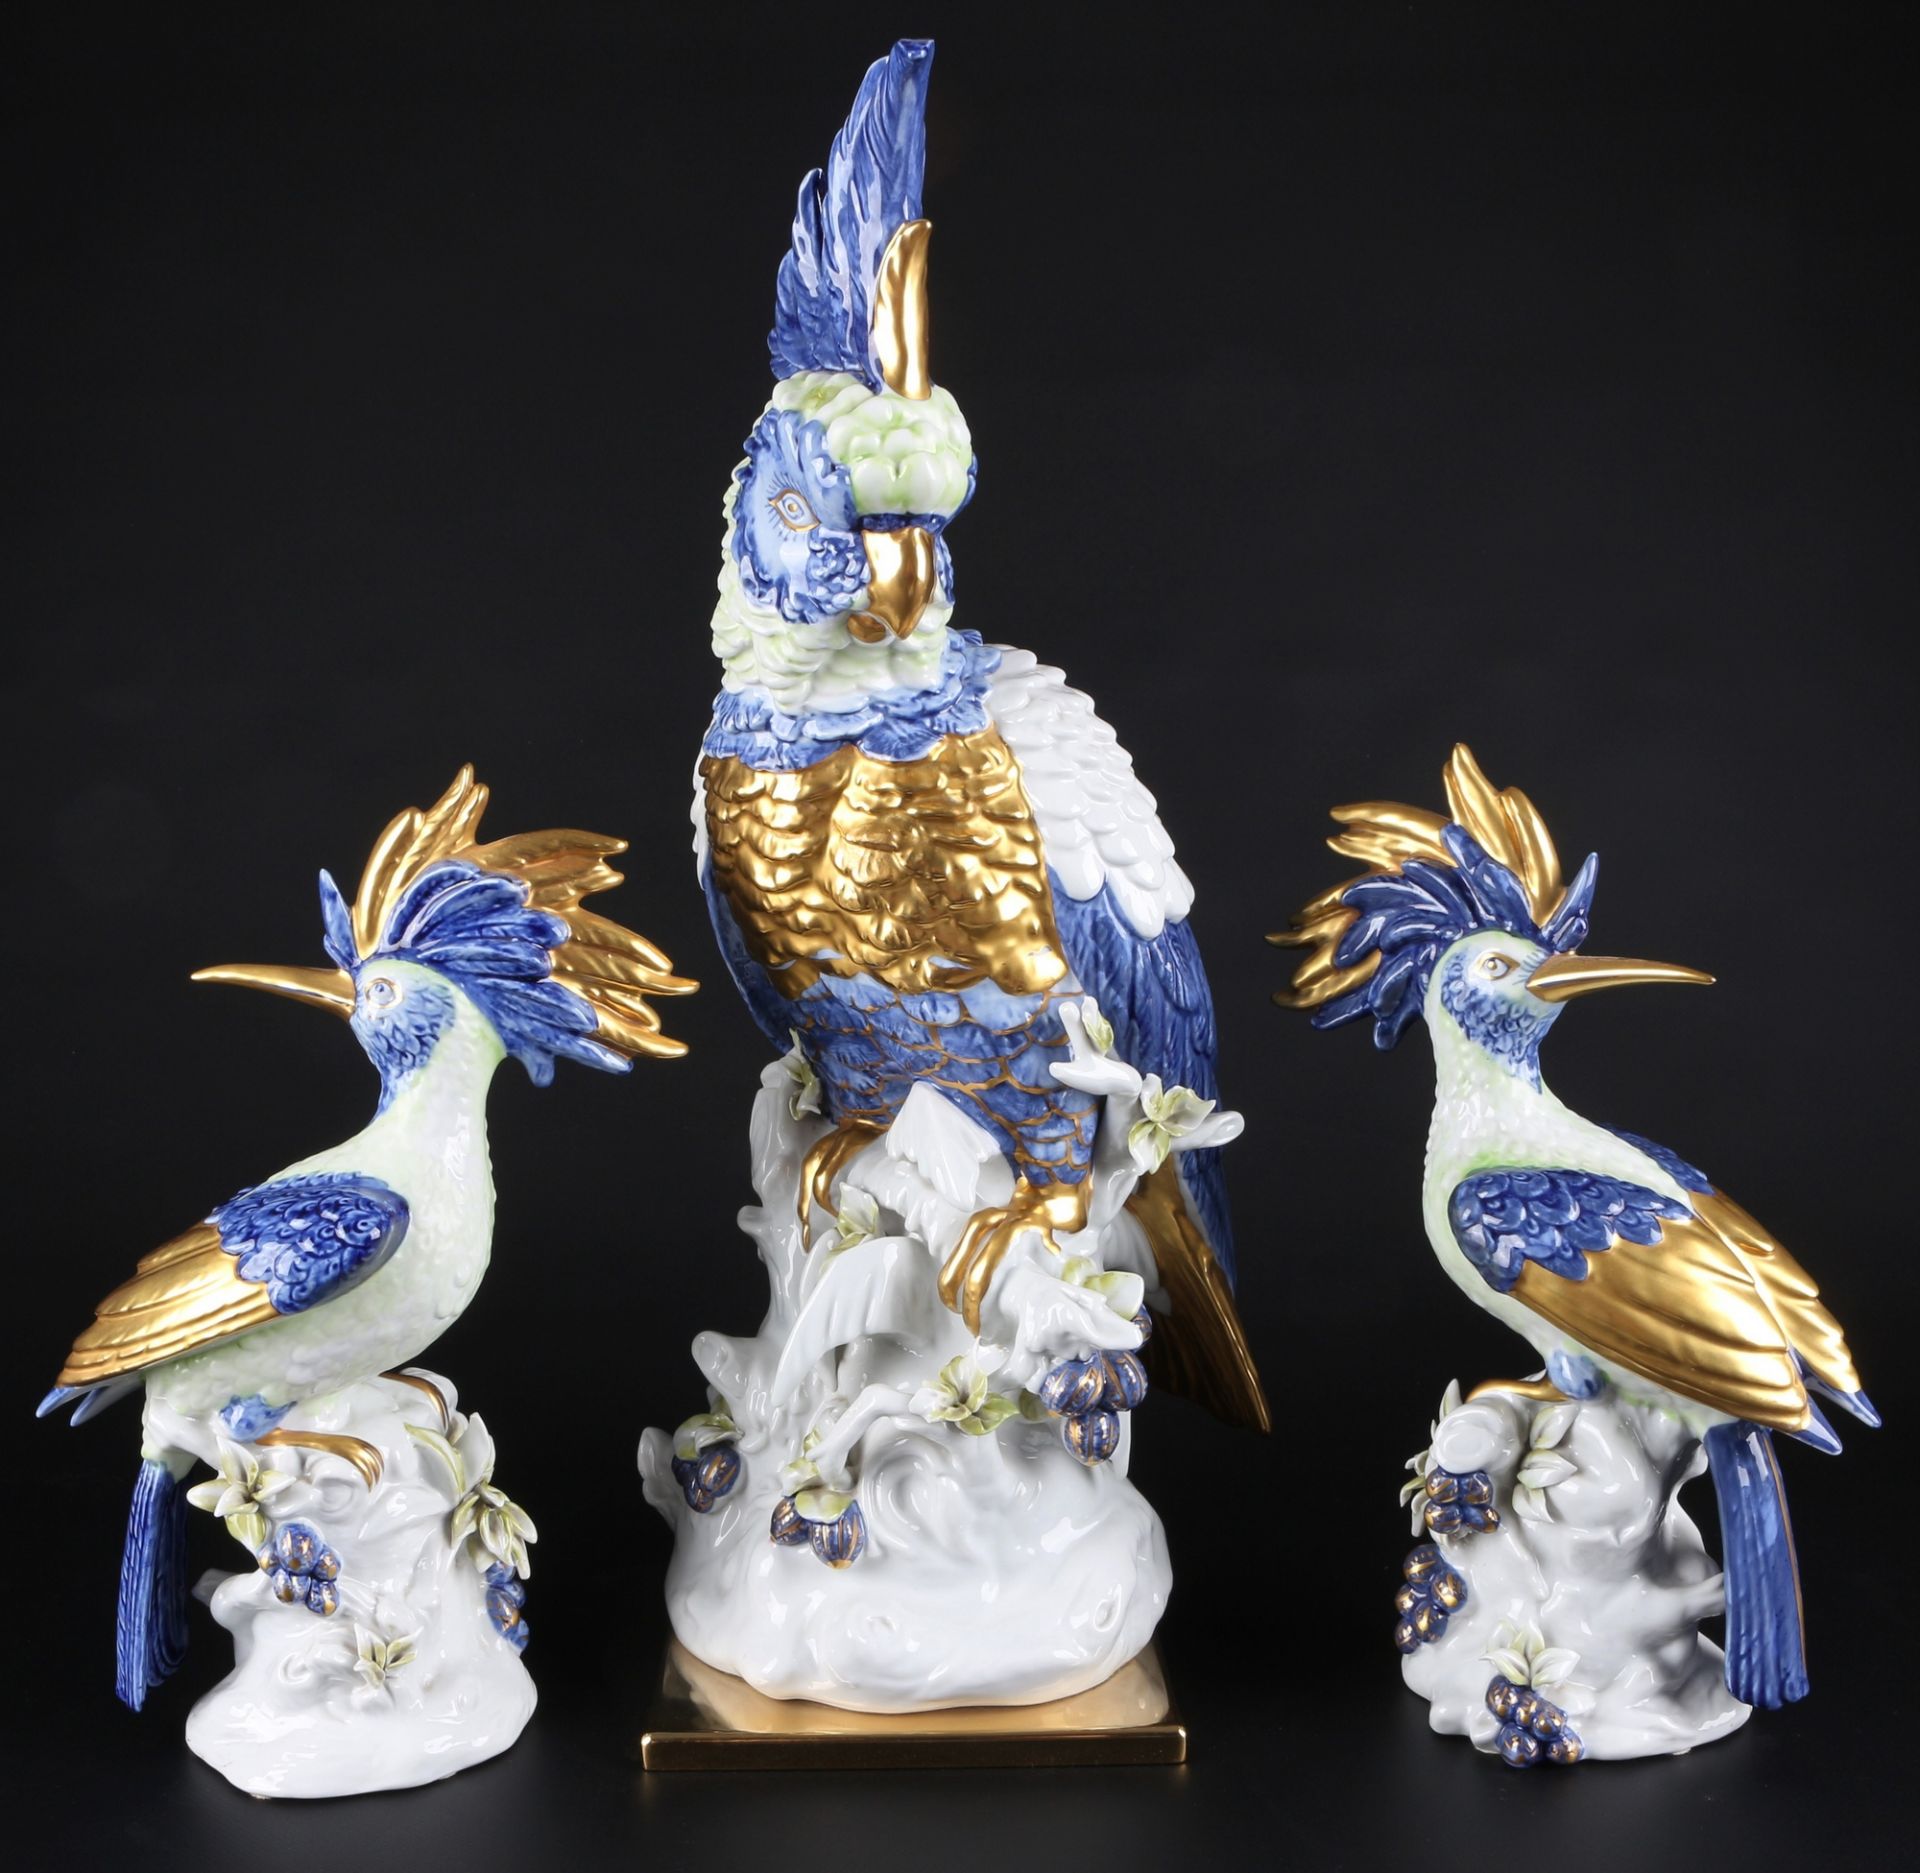 Manifattura Artistica le Porcellane großer Kakadu mit 2 Wiedehopfe, porcelain parrot / hoopoo,